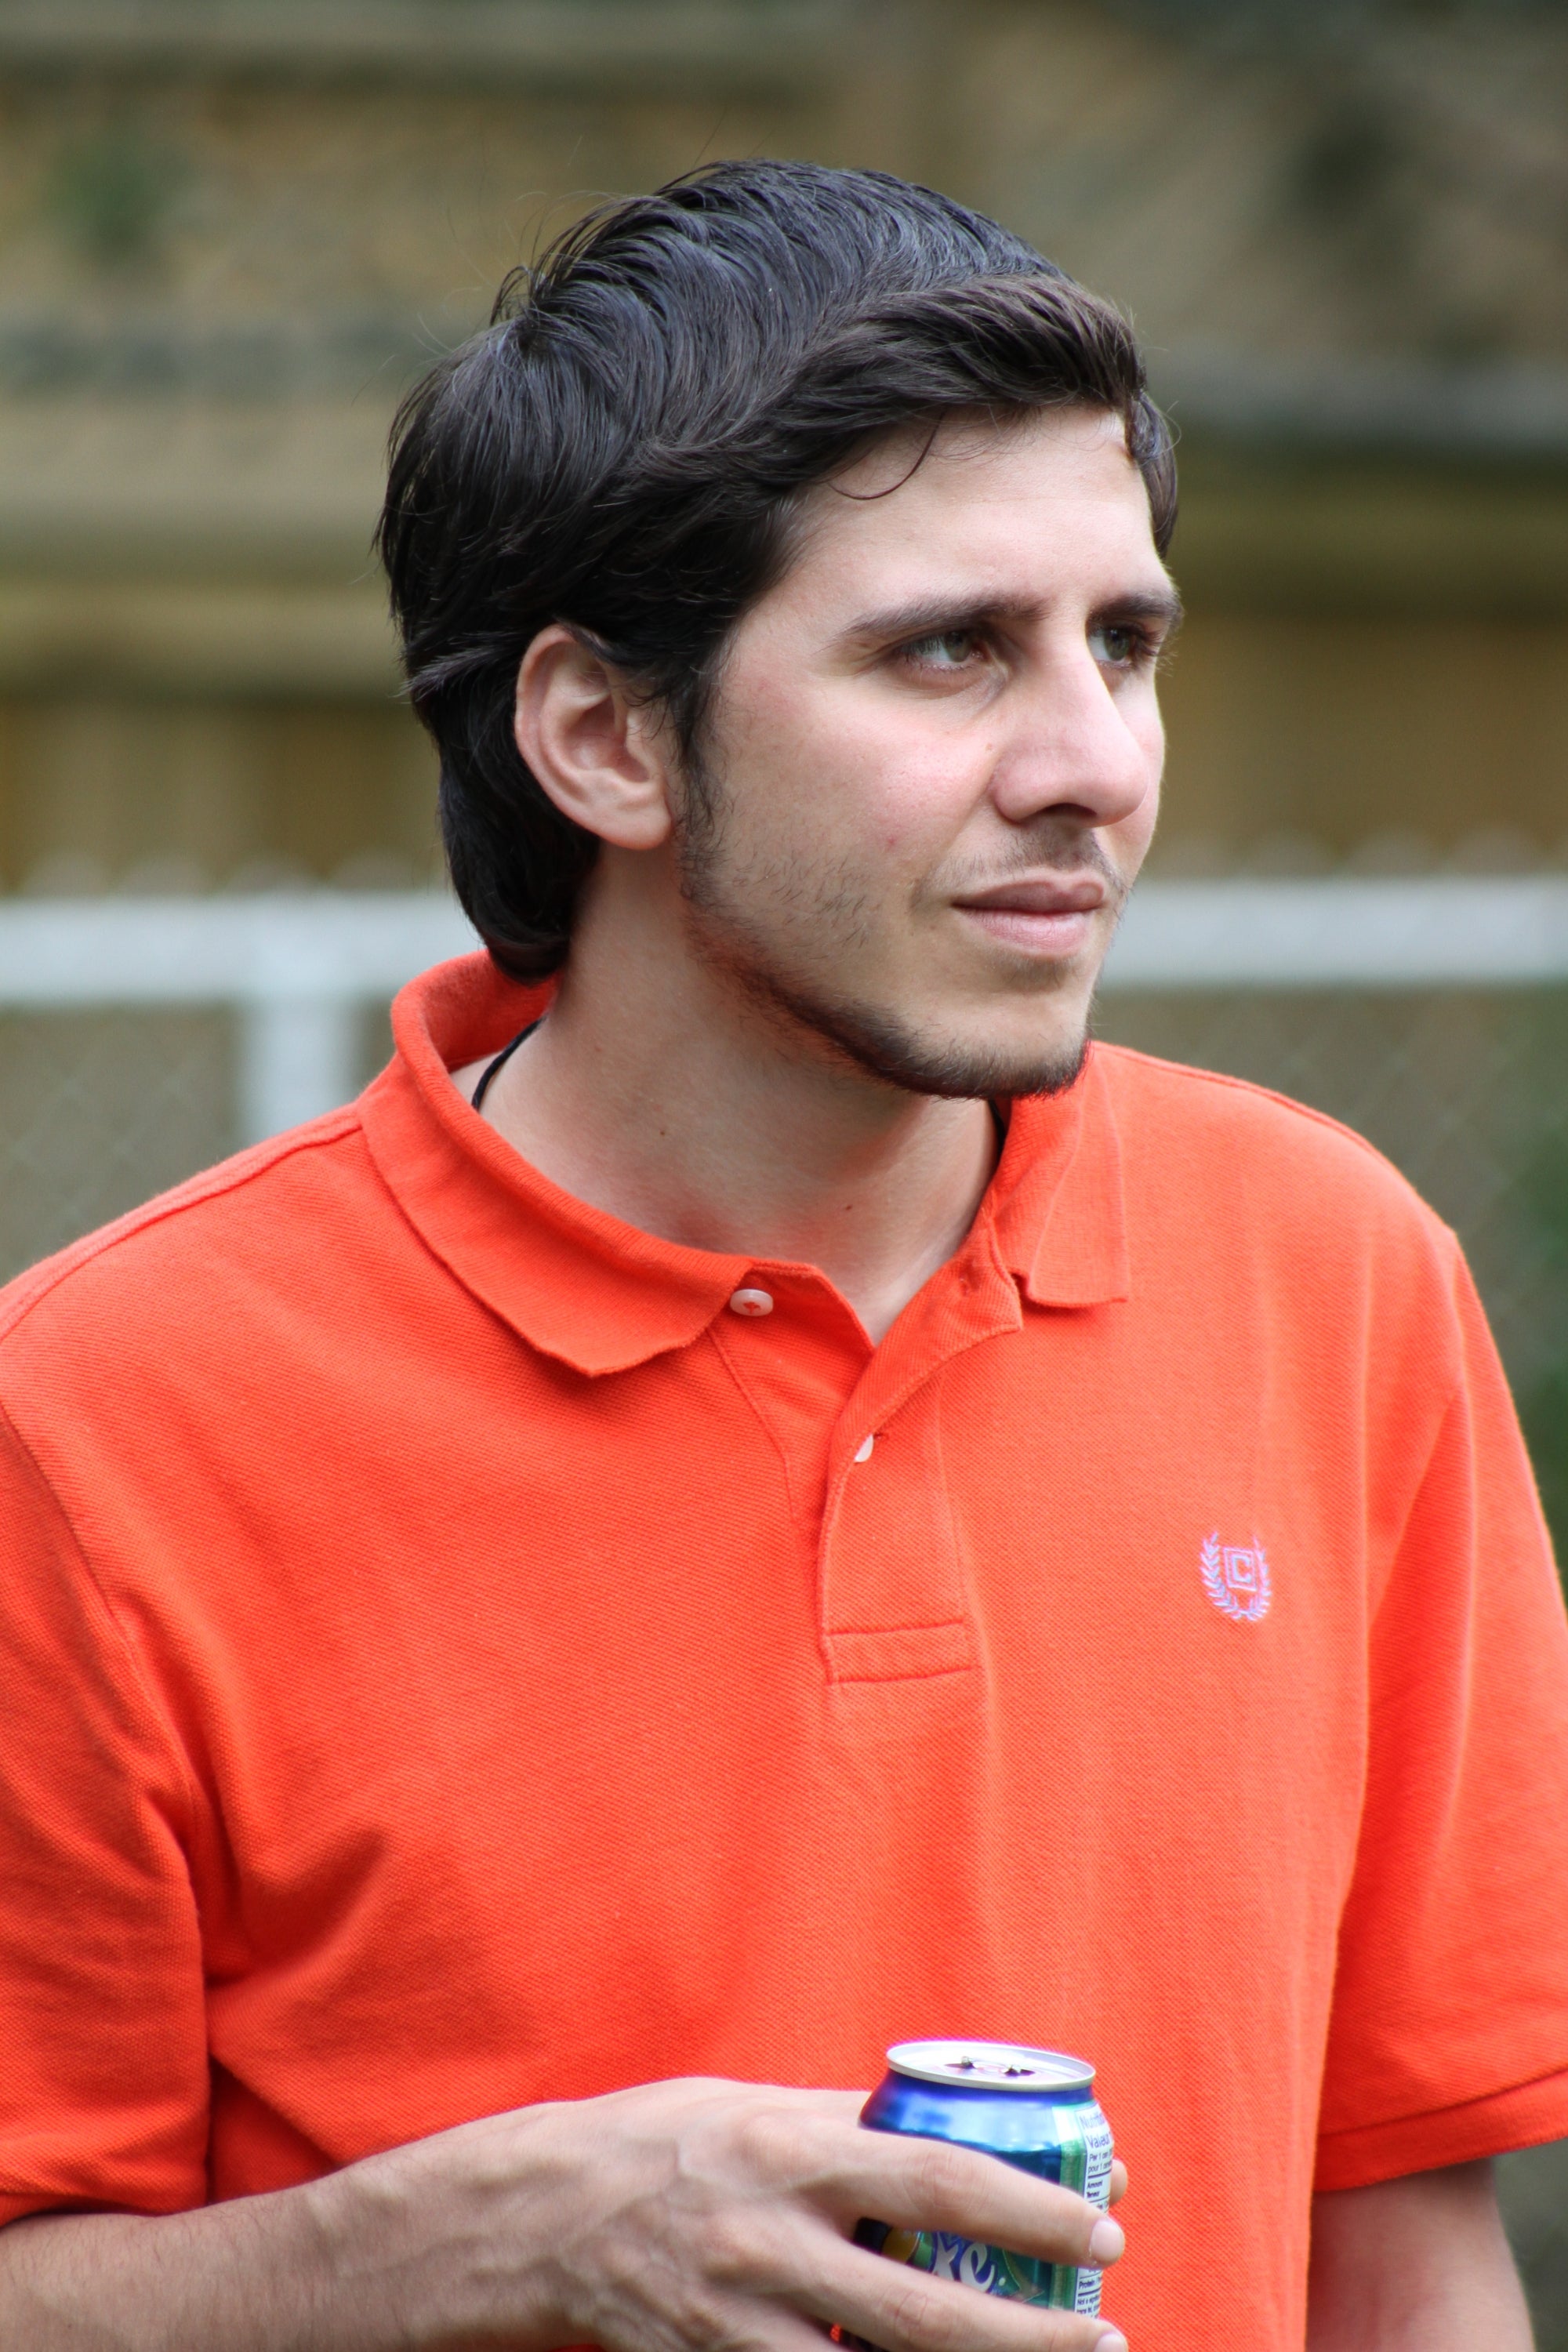 Marco in orange shirt